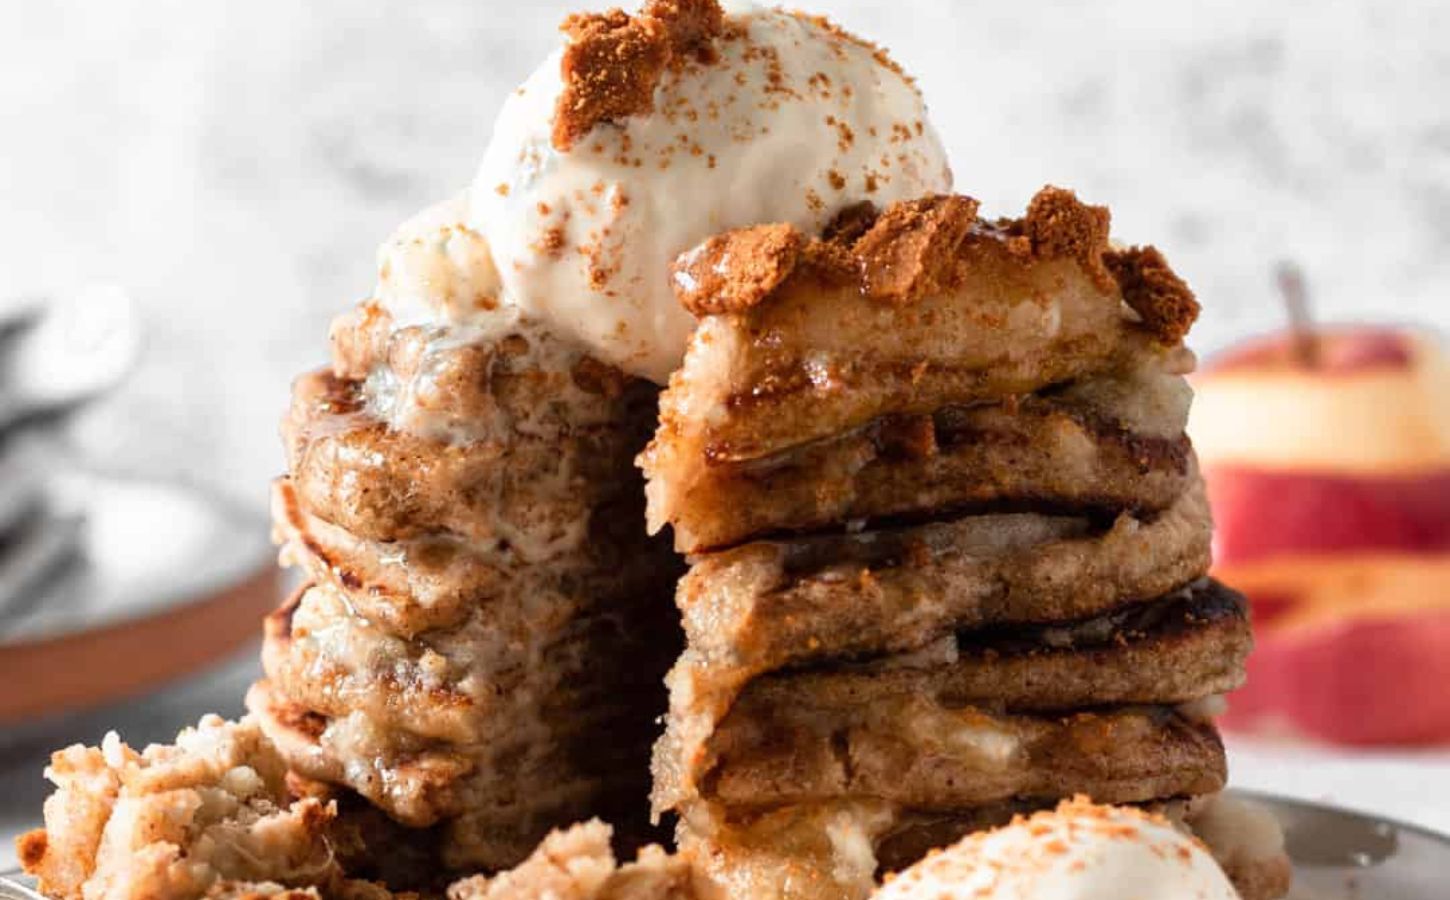 Vegan apple-pie flavored pancakes with dairy-free ice cream on top